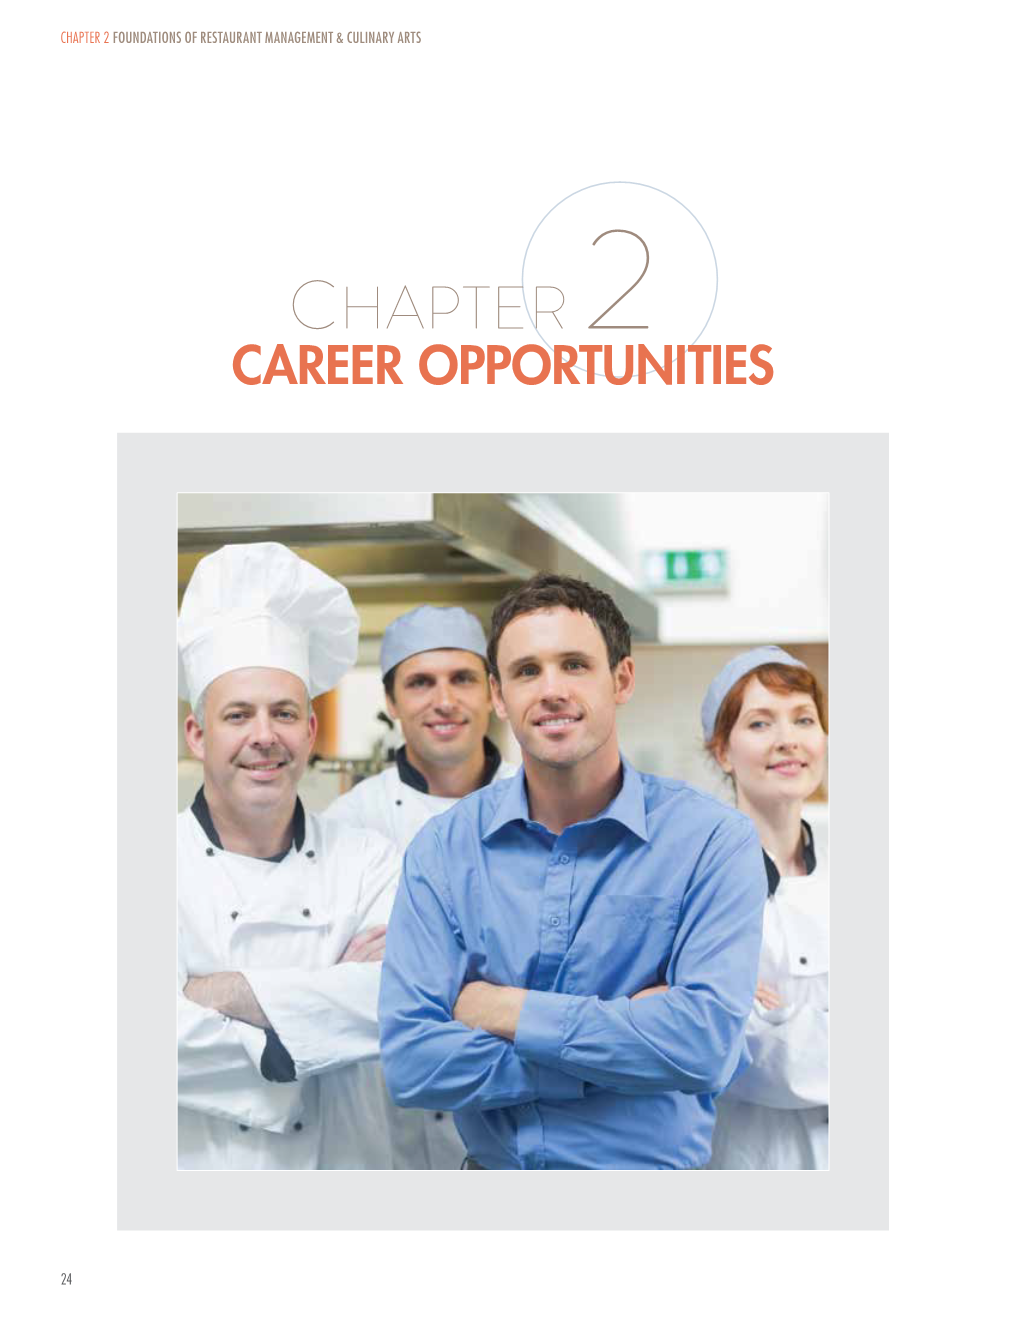 Chapter 2, Career Opportunities